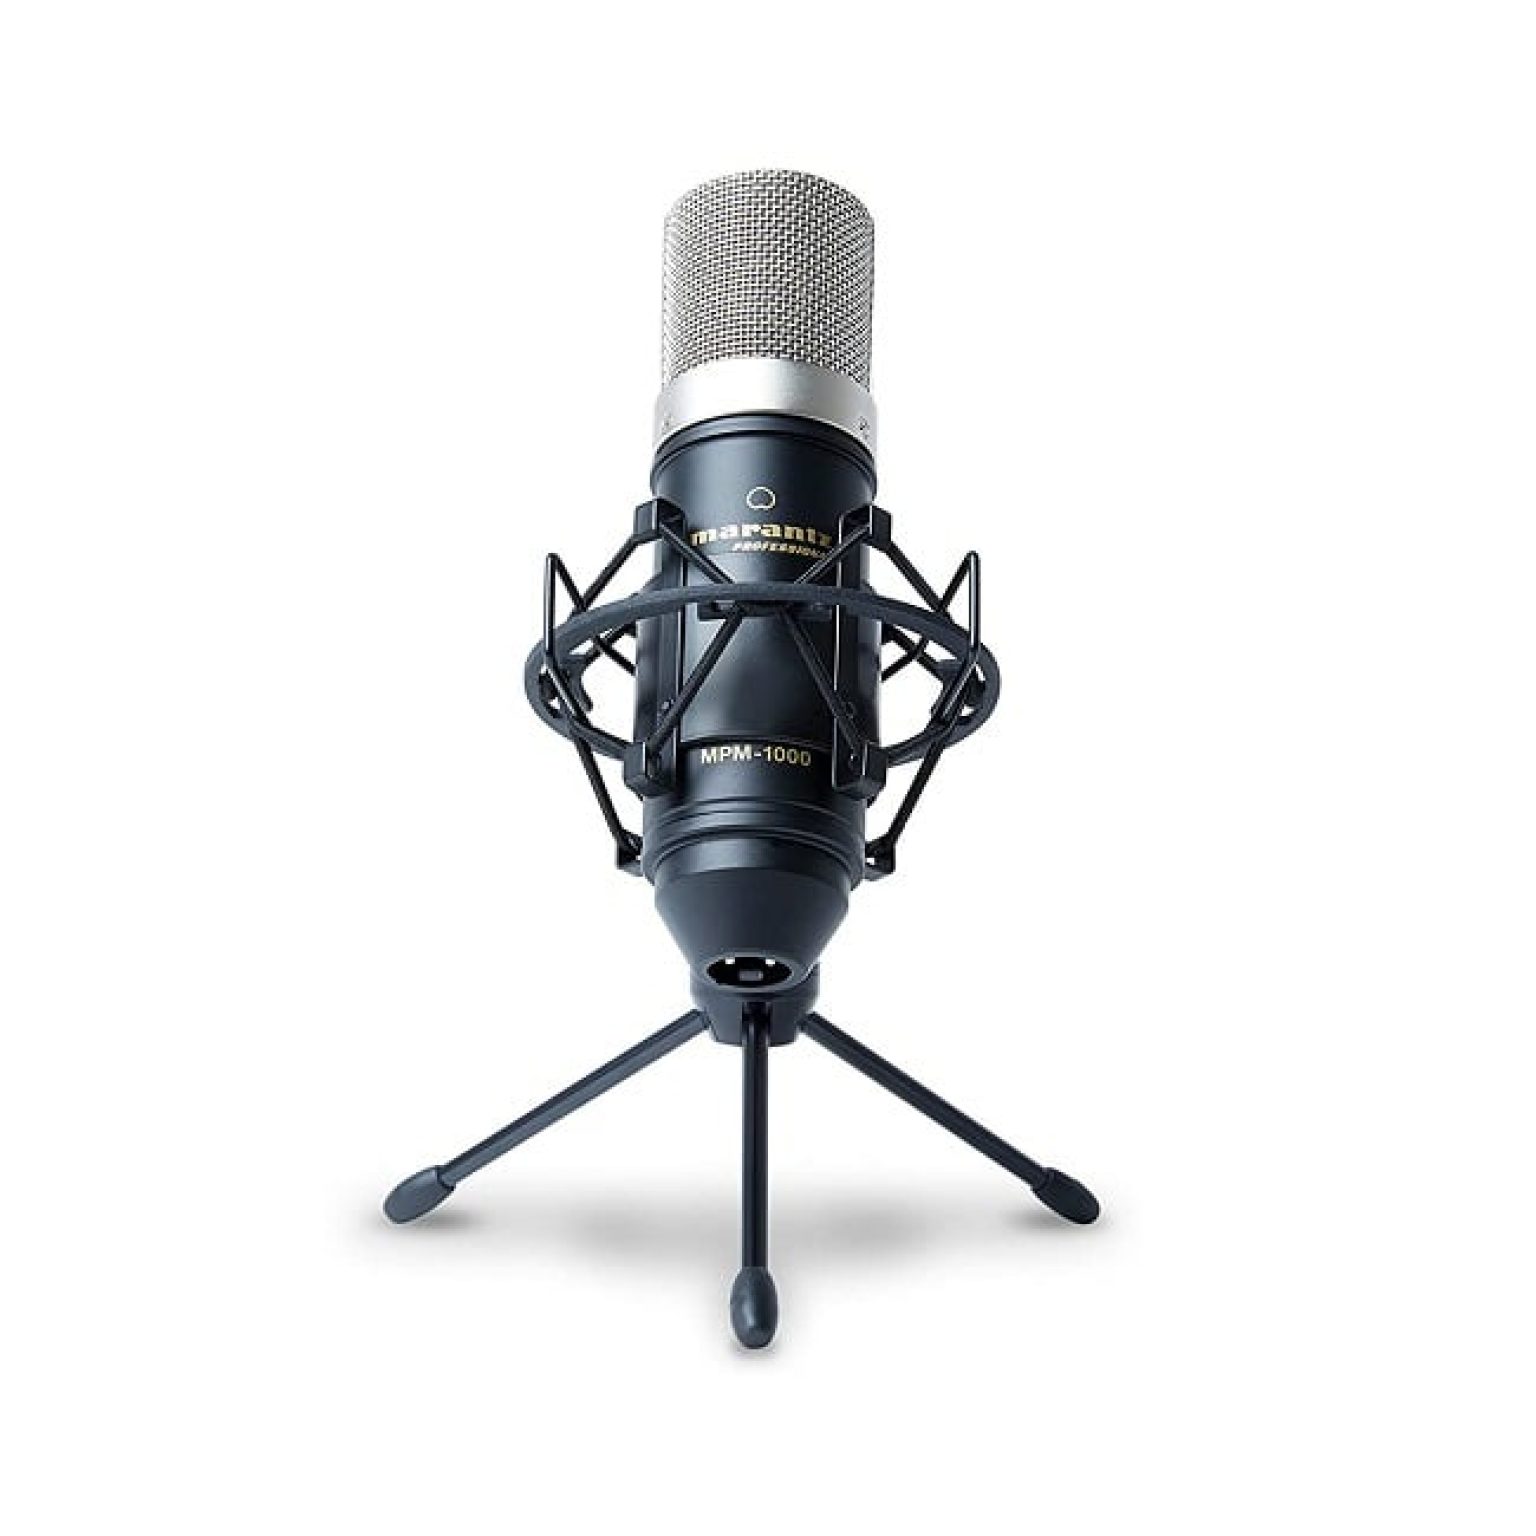 Marantz MPM 1000 Microphone